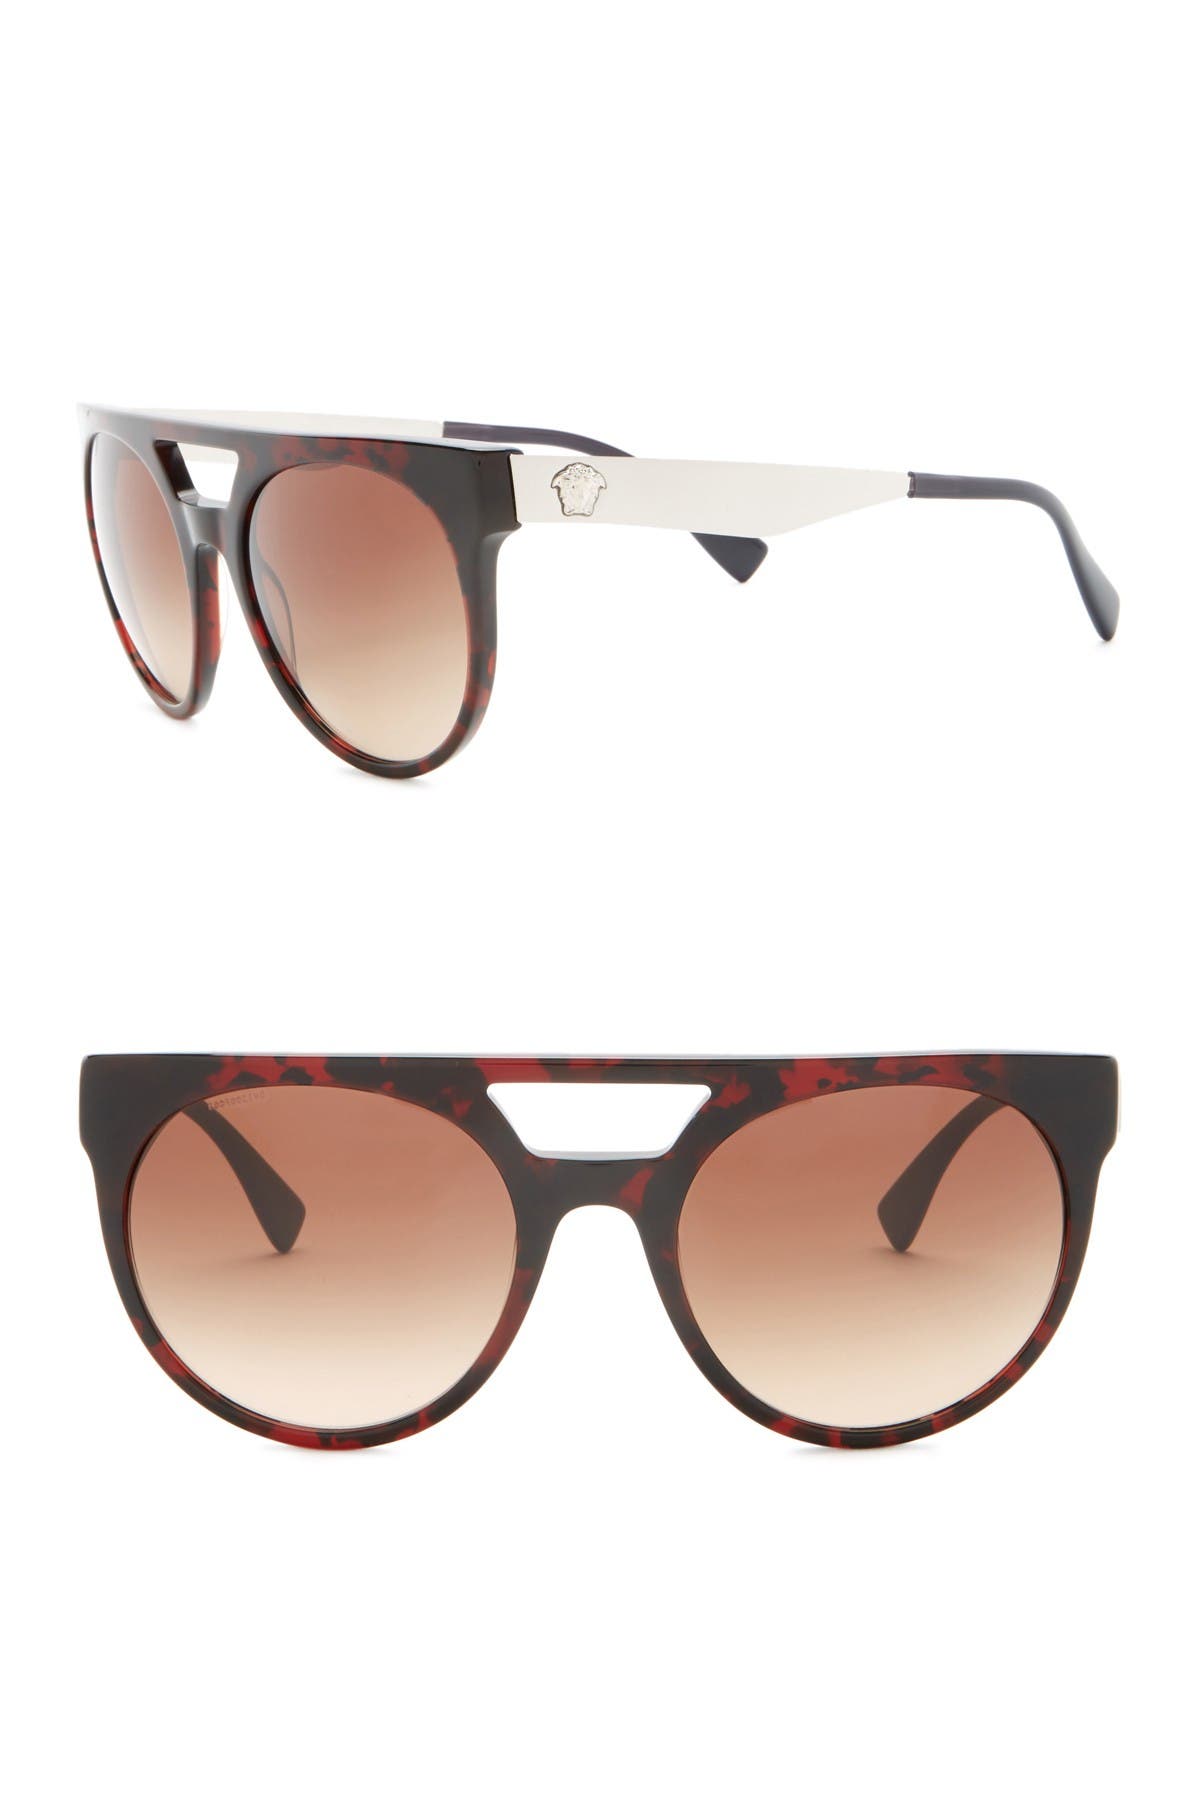 Versace | 55mm Round Sunglasses 